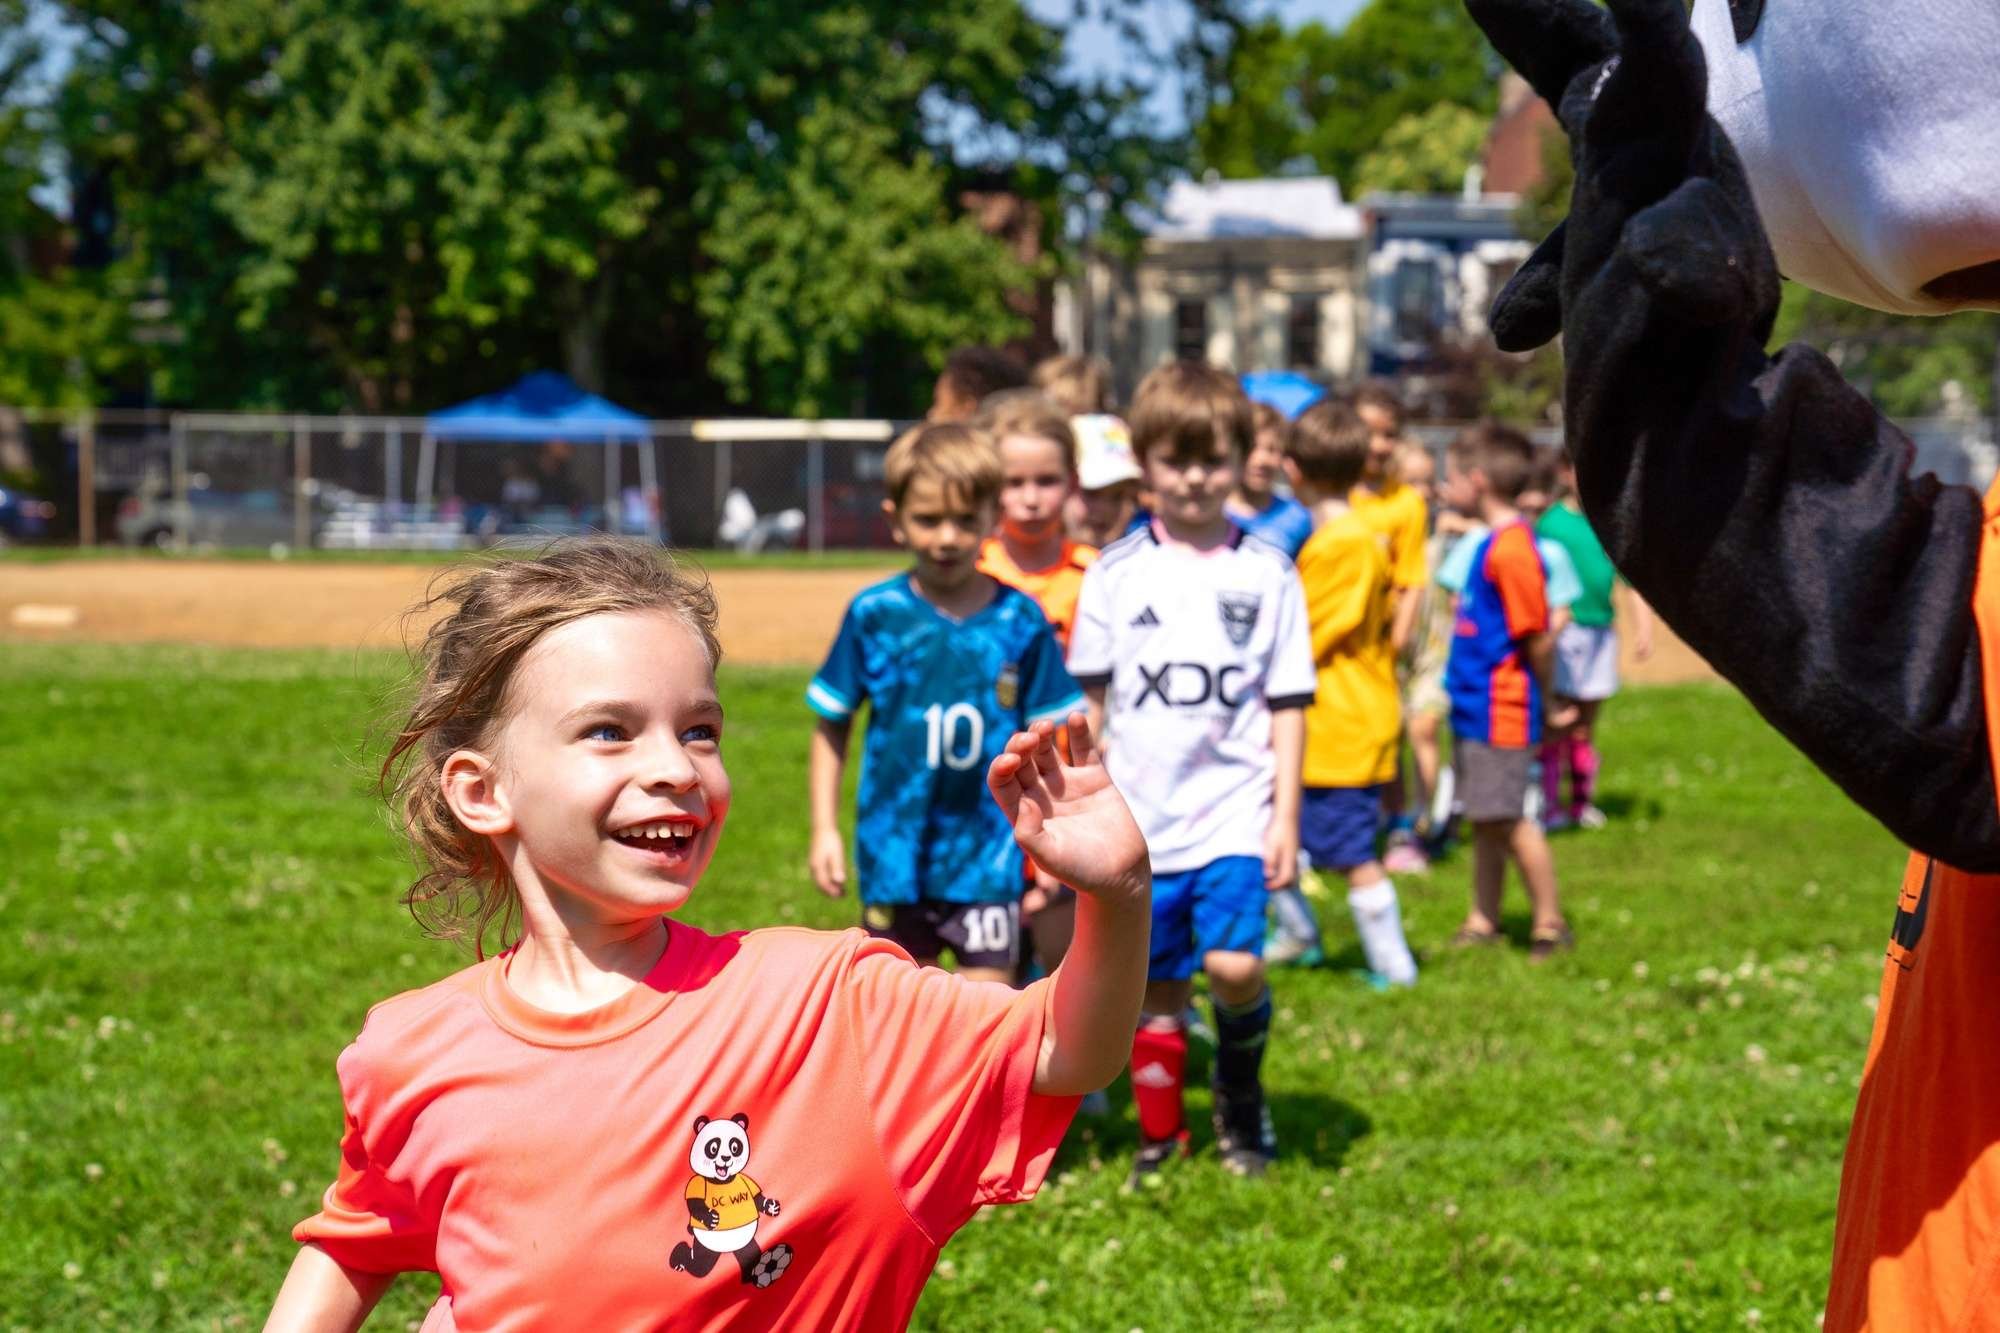 Dc-way-soccer-club-for-kids-in-washington-dc-summer-camp-at-tyler-elementary-school- 0197.jpg